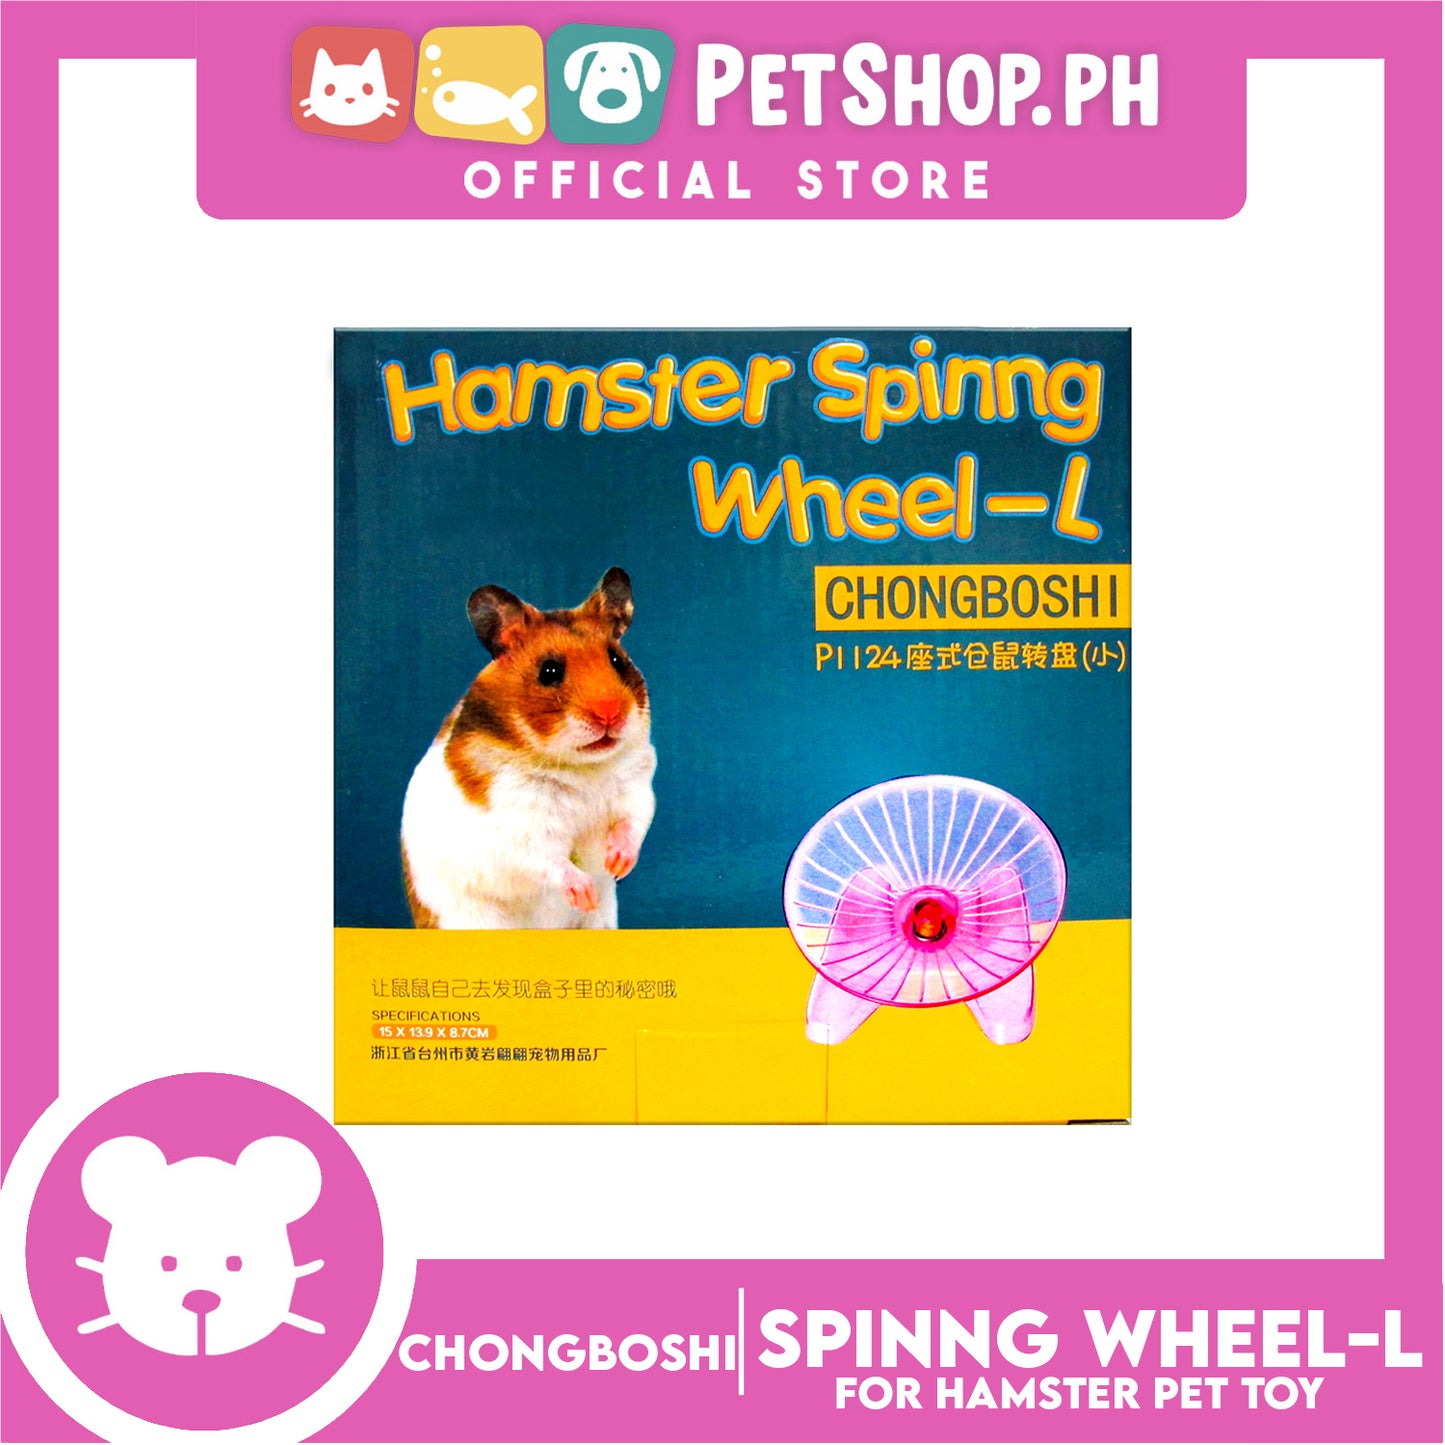 Spottoys Hamster Spinng Wheel L P1124